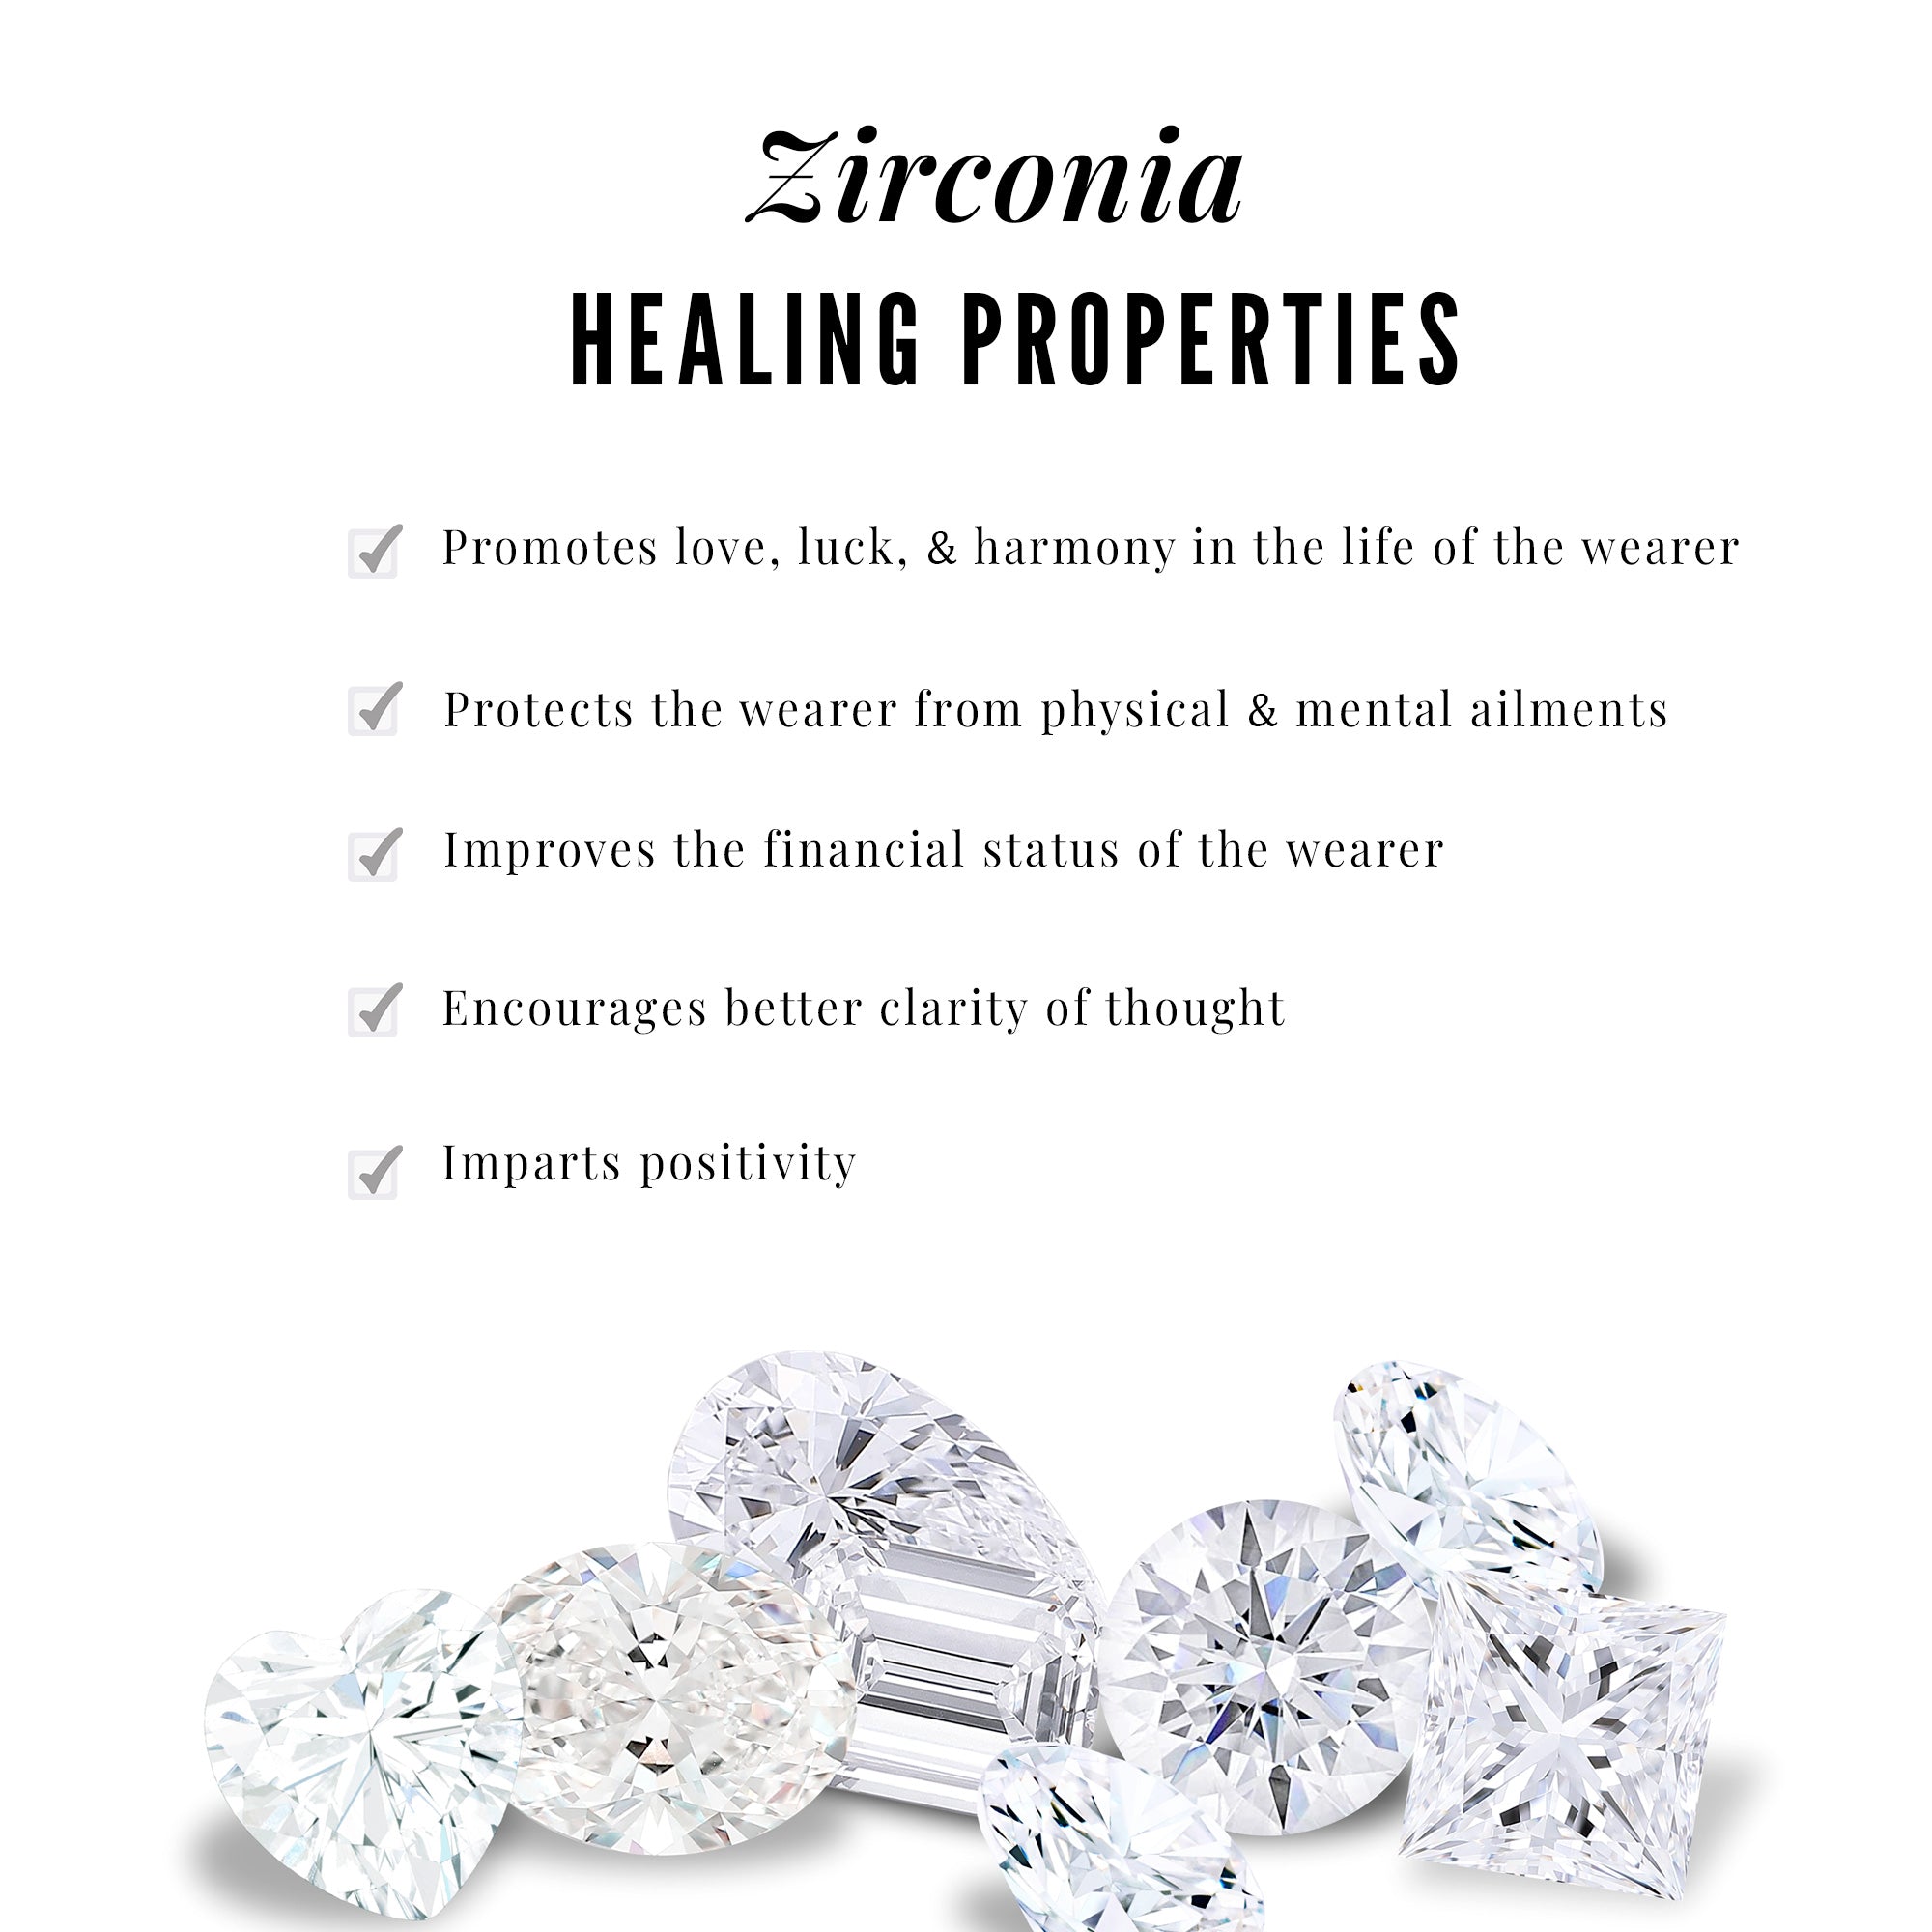 3 CT Solitaire Cubic Zirconia Criss Cross Engagement Ring Zircon - ( AAAA ) - Quality - Rosec Jewels